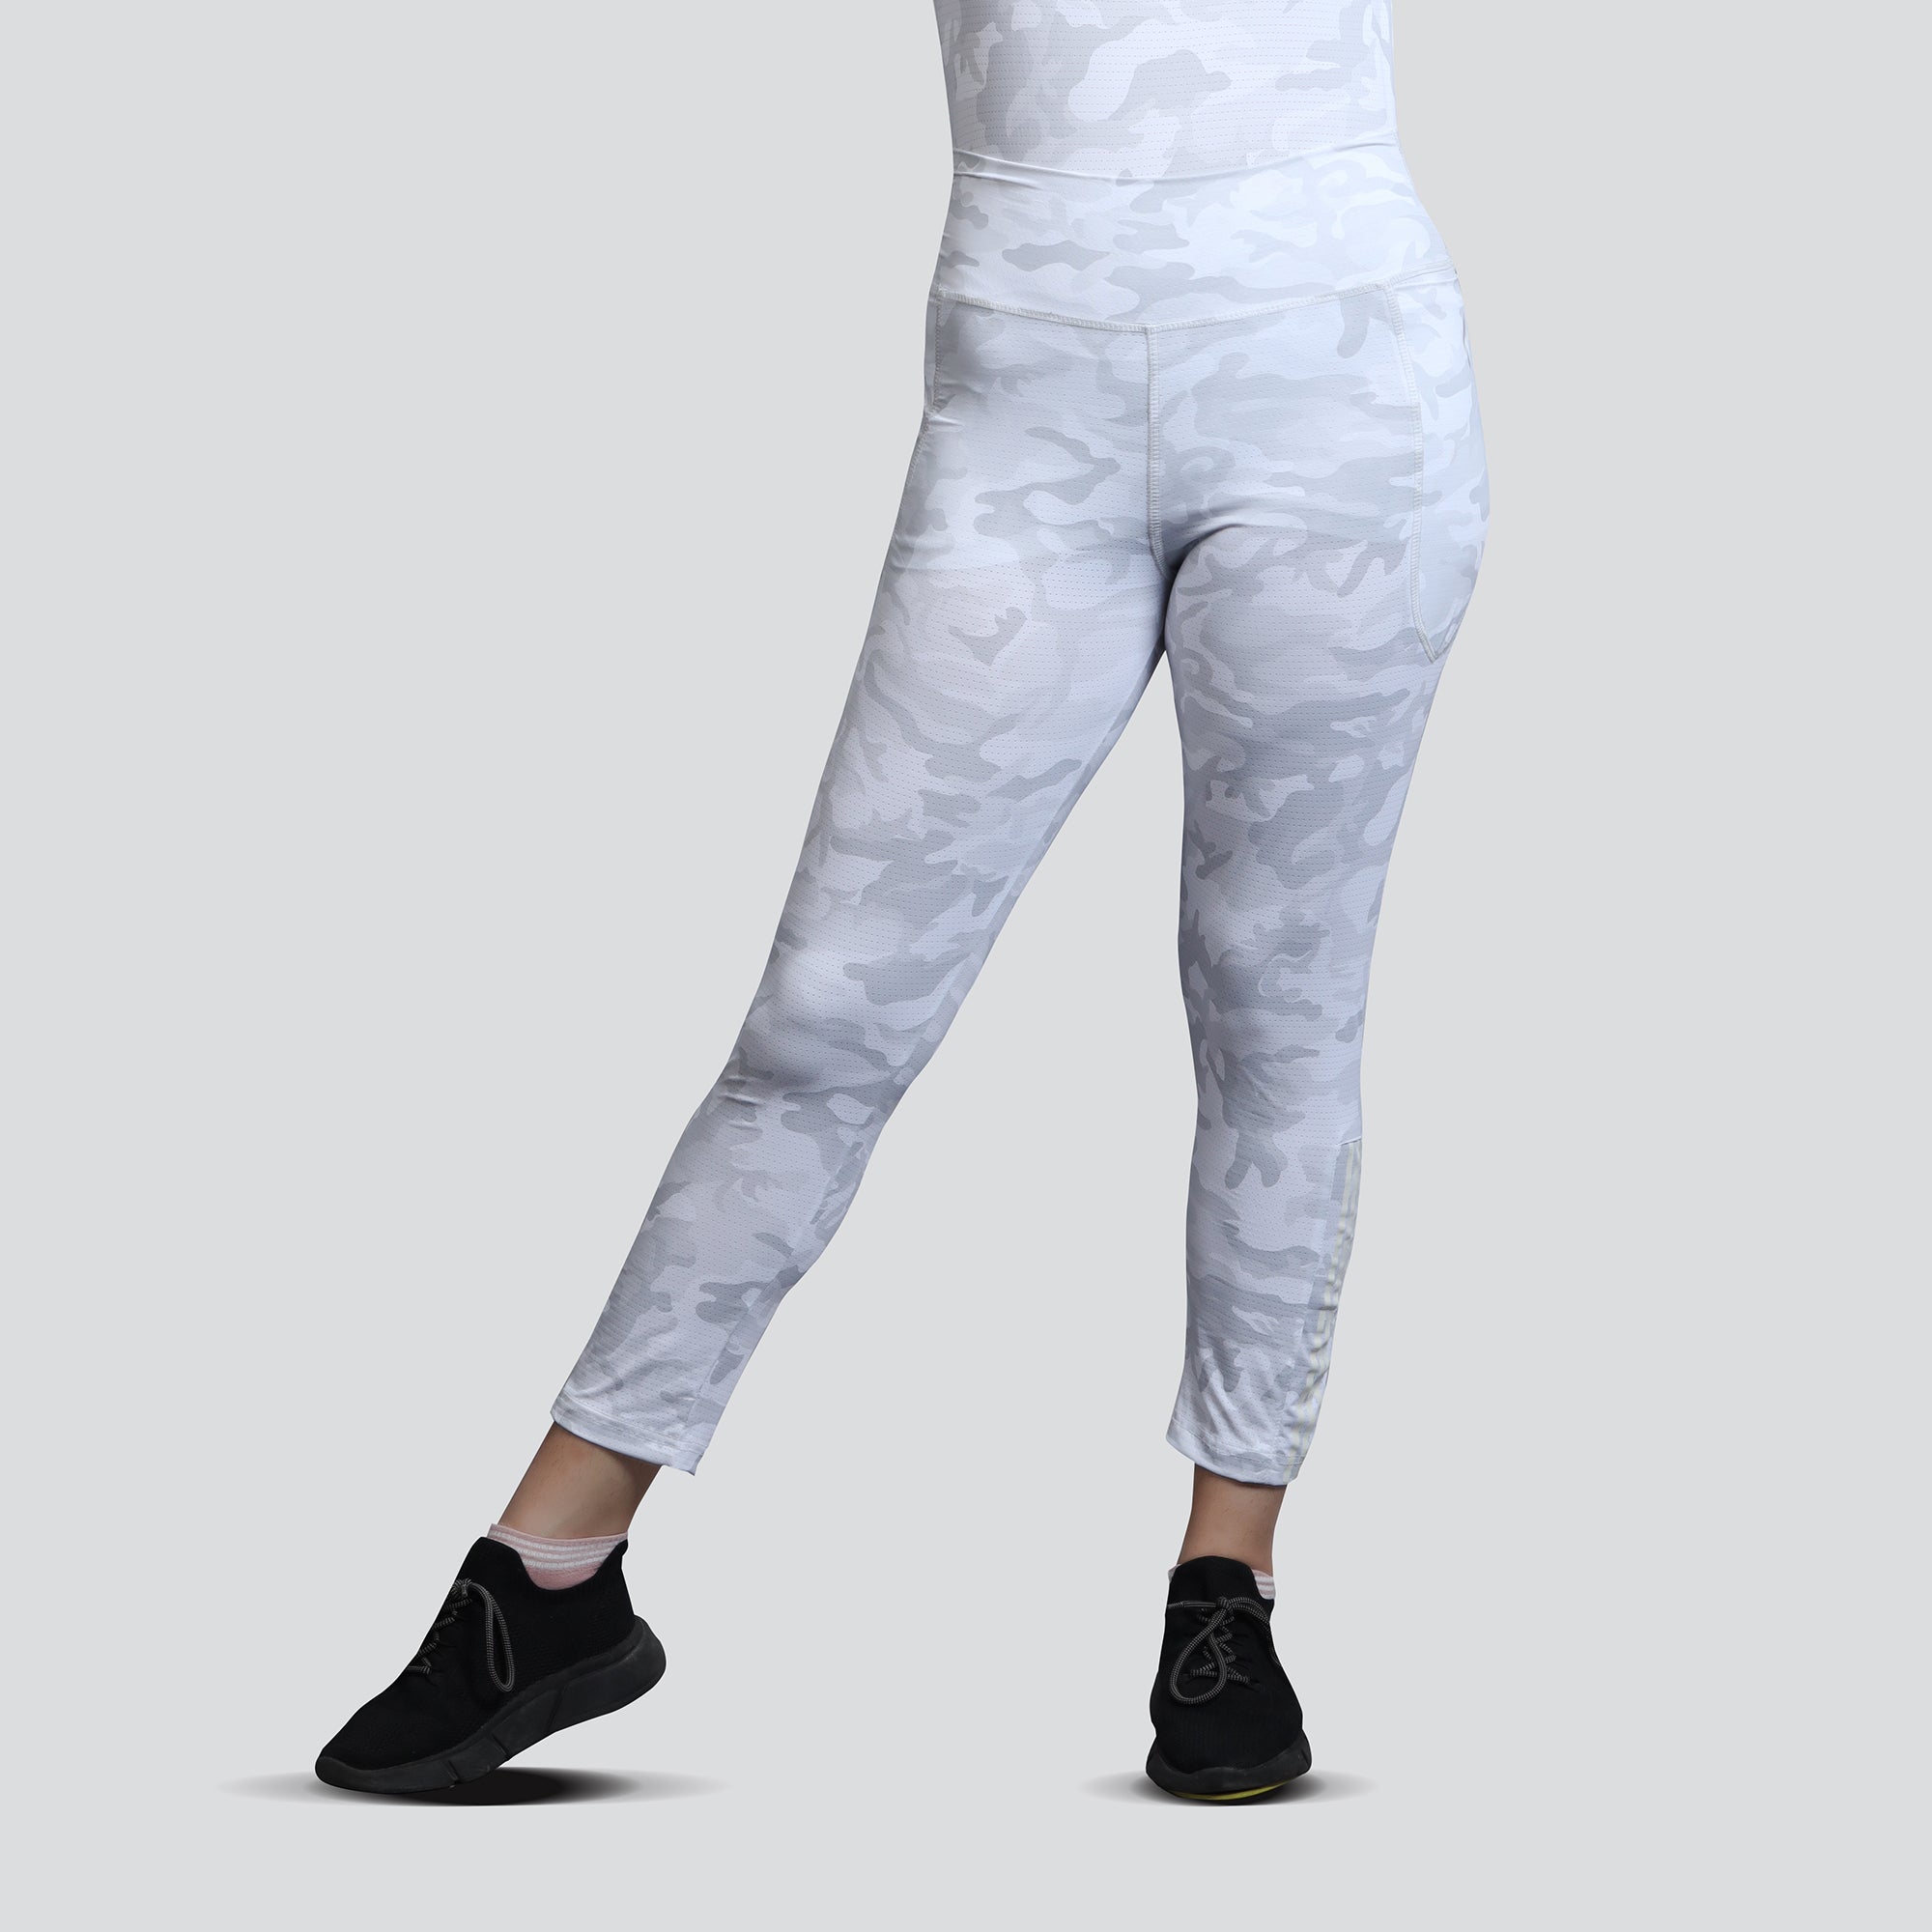 Lululemon Alpine White and Gray Camo Leggings  Grey leggings outfit, Grey lululemon  leggings, White camo leggings outfit